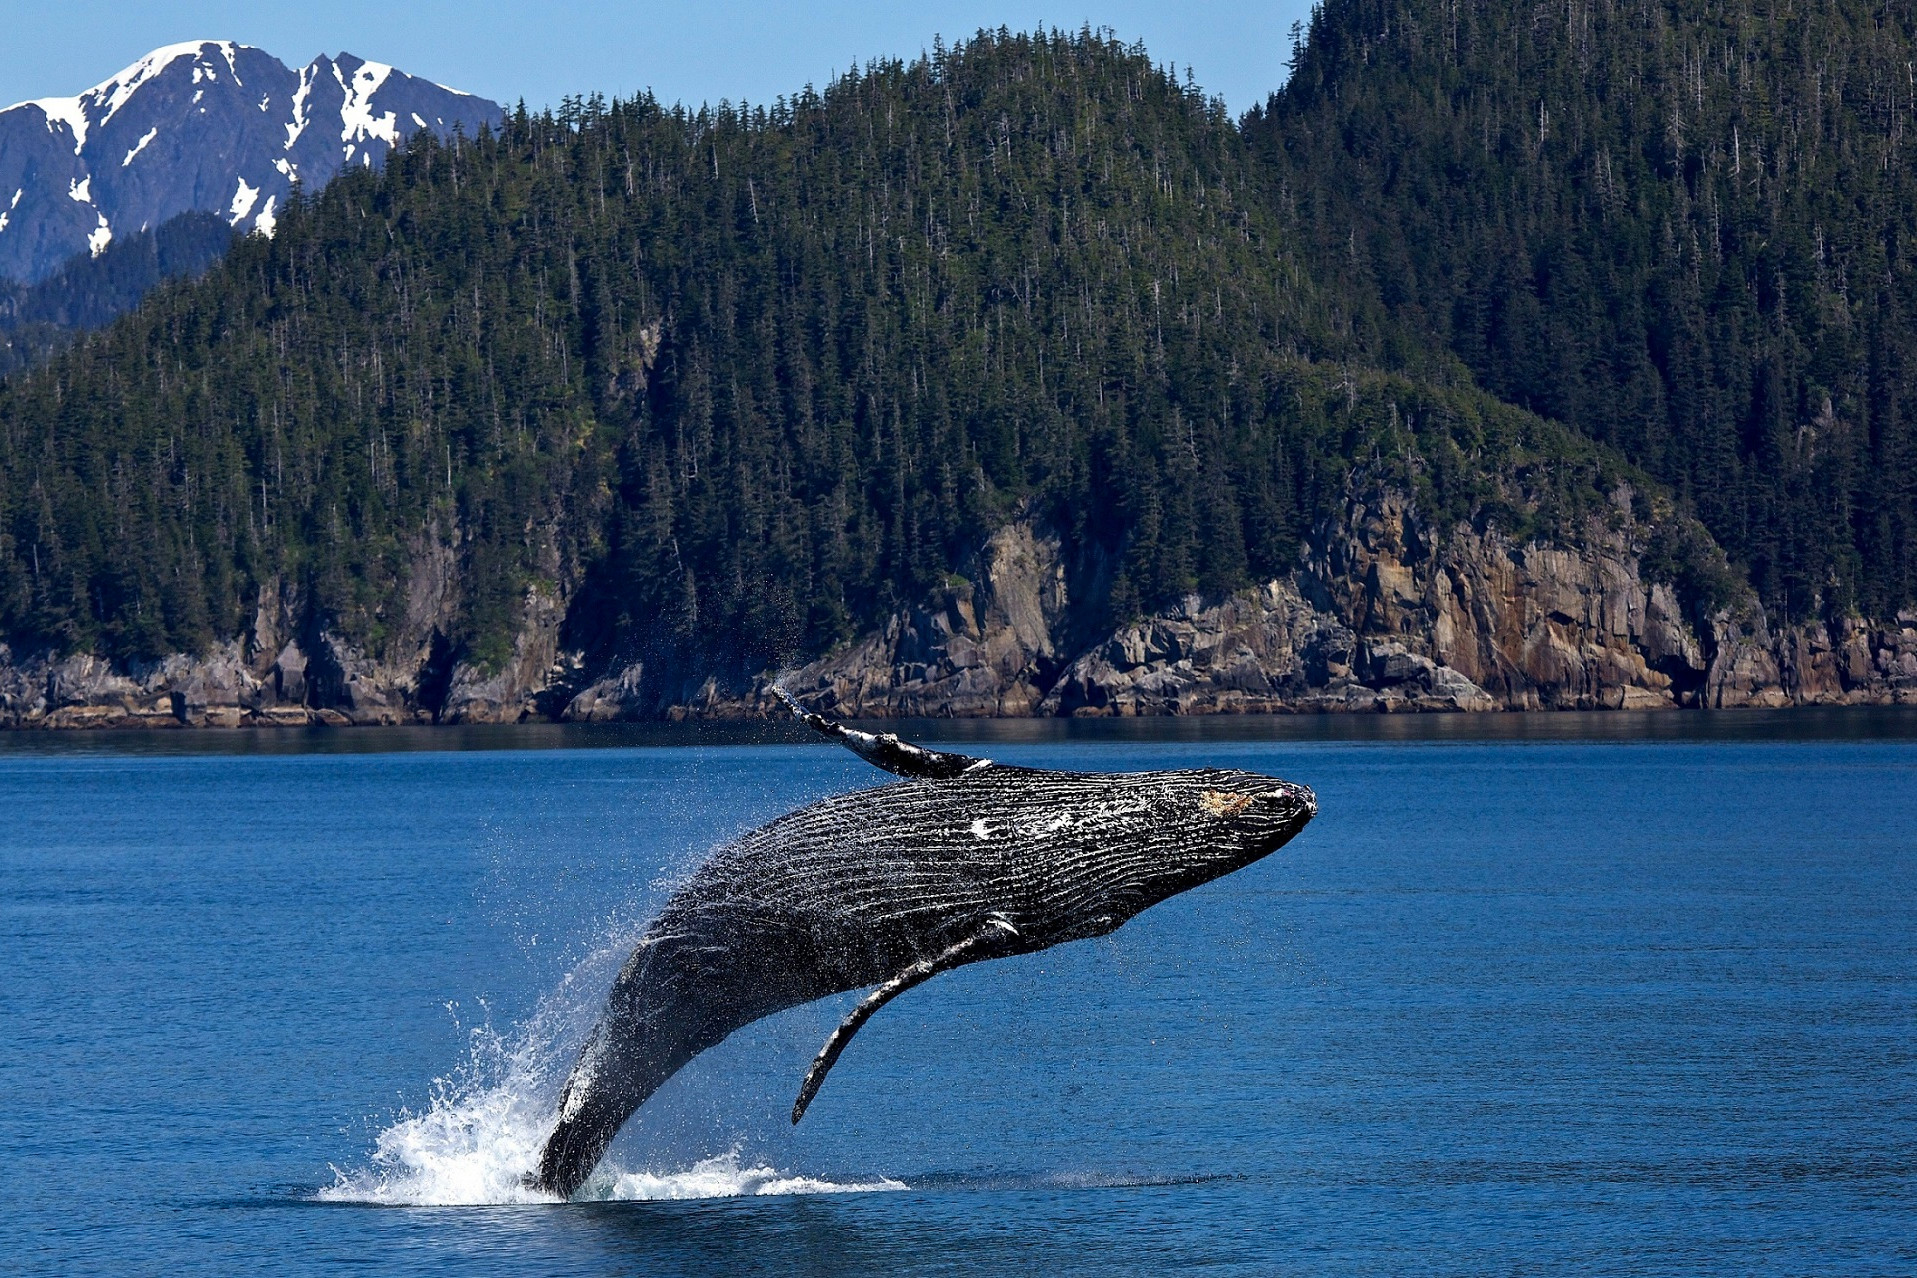 California’s Crabbing Season Delayed Again to Protect Humpback Whales